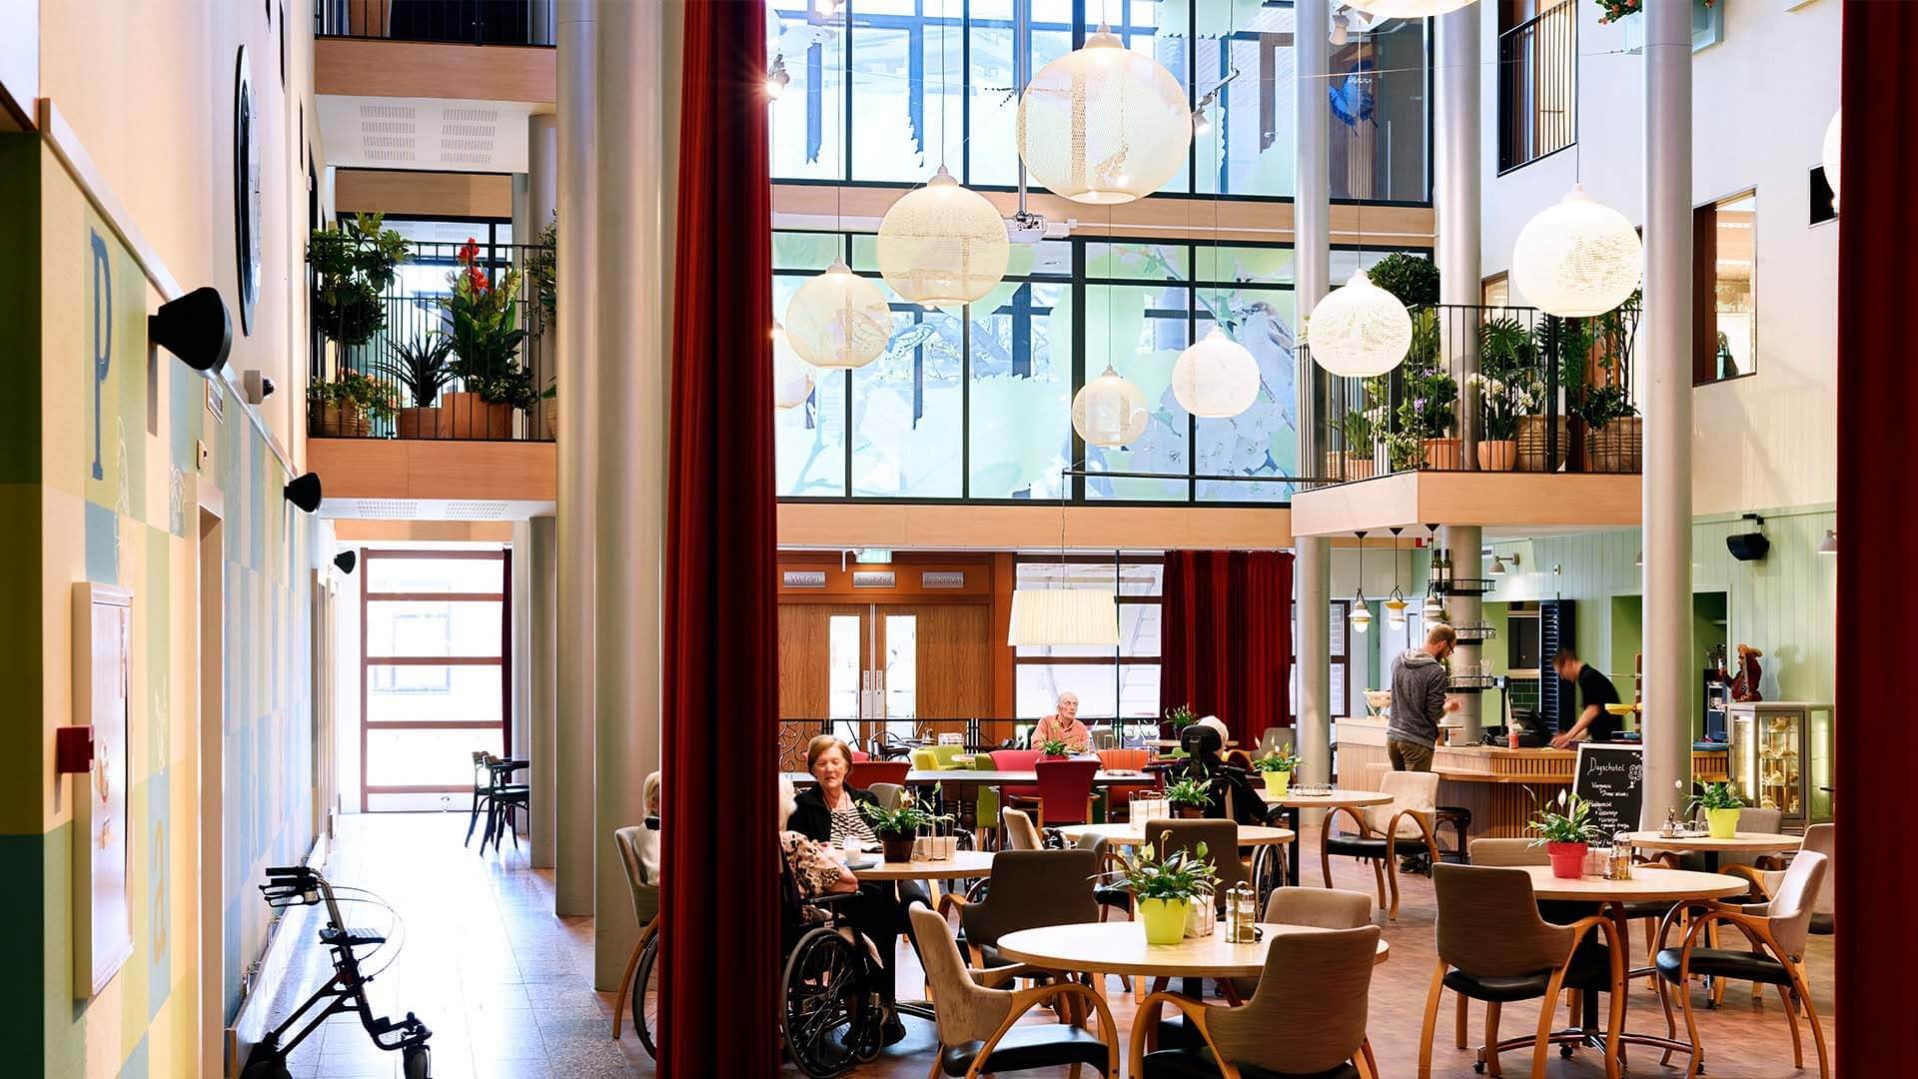 AxionContinu De Parkgraaf, restaurant revalidatiecentrum, restaurant wzc, balkons atrium | Burobas